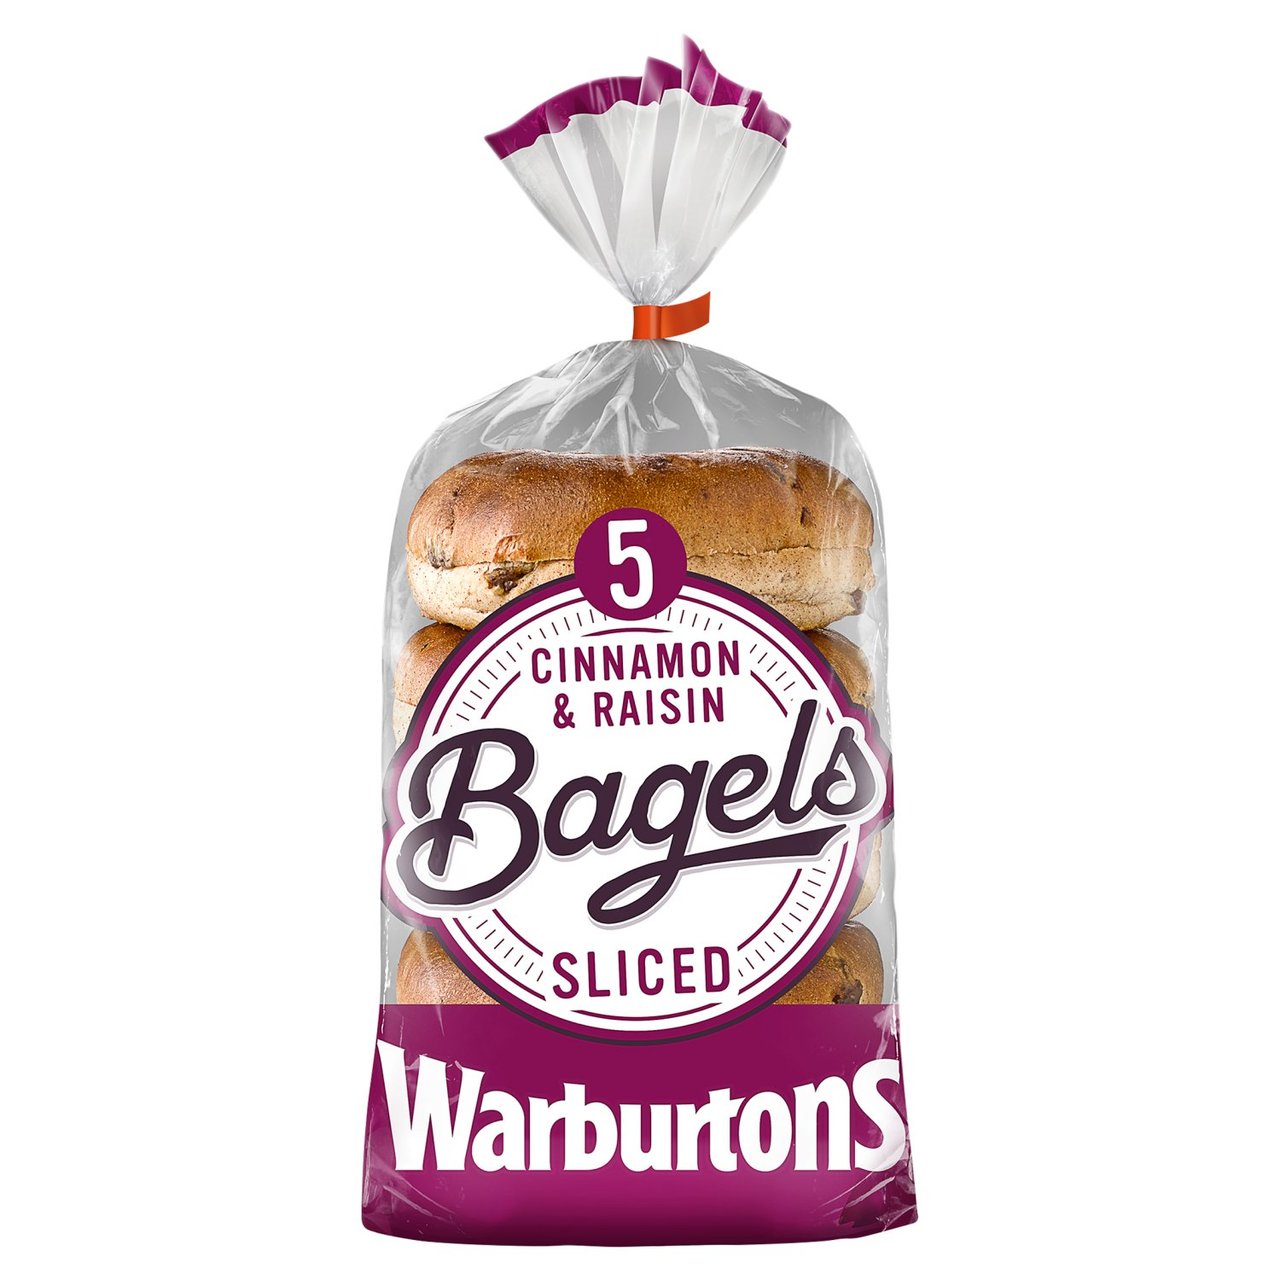 Warburtons pack 5 Cinnamon & Raisin Bagels